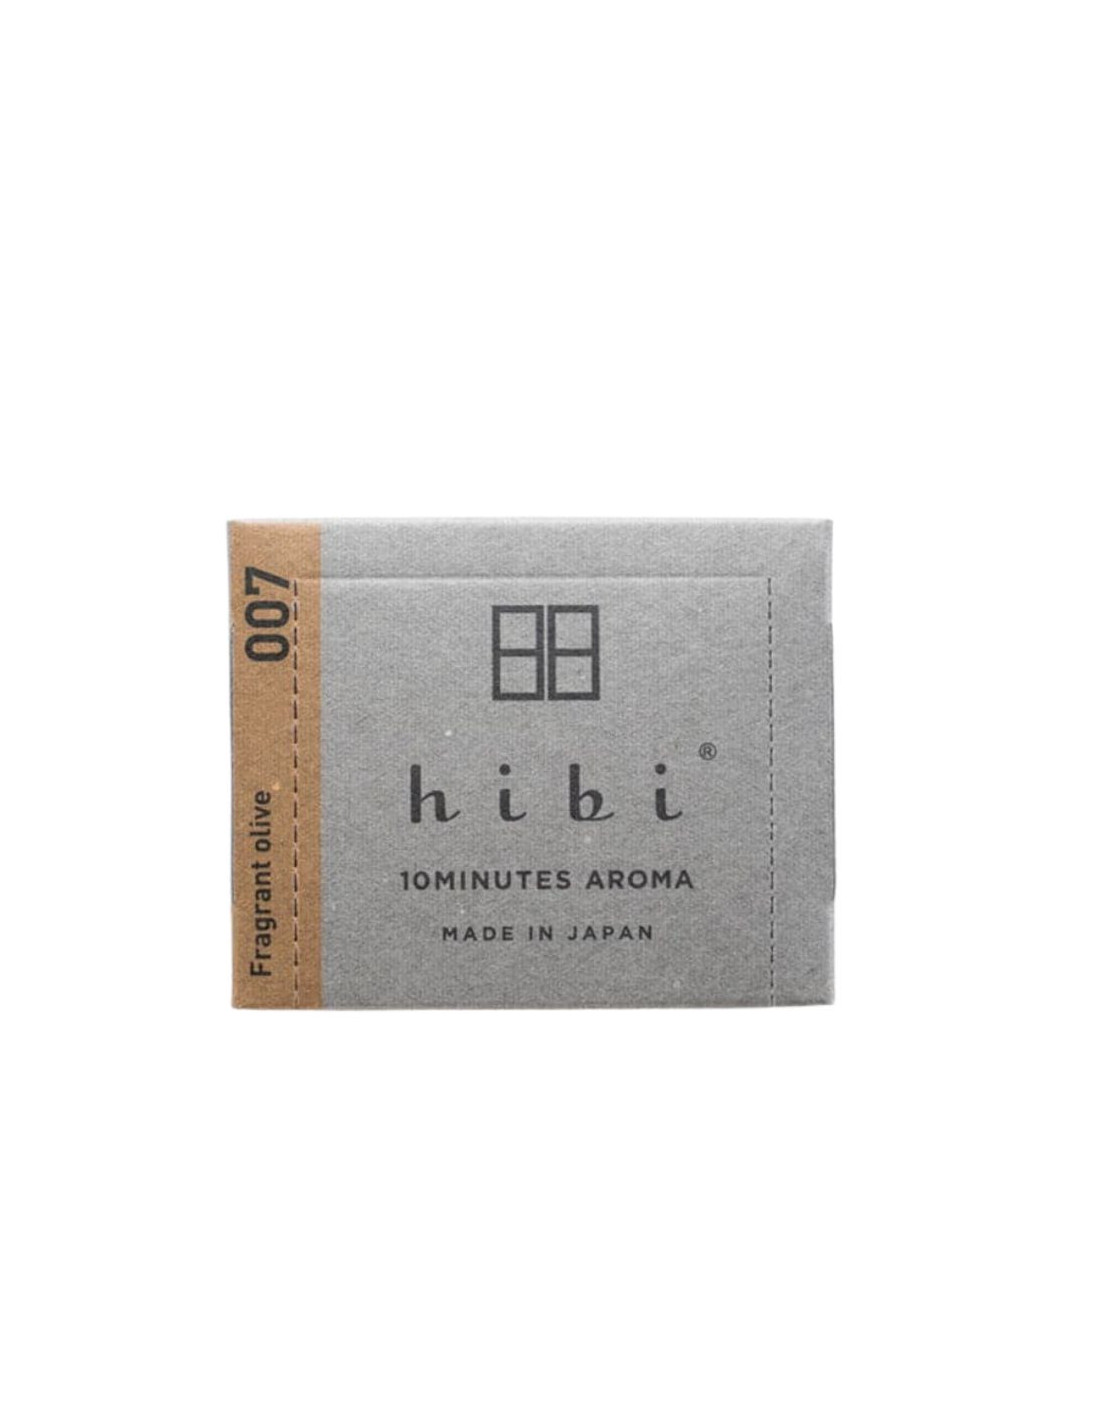 Japanese Incense sticks (Large Box) - 007 Fragrant Olive - hibi